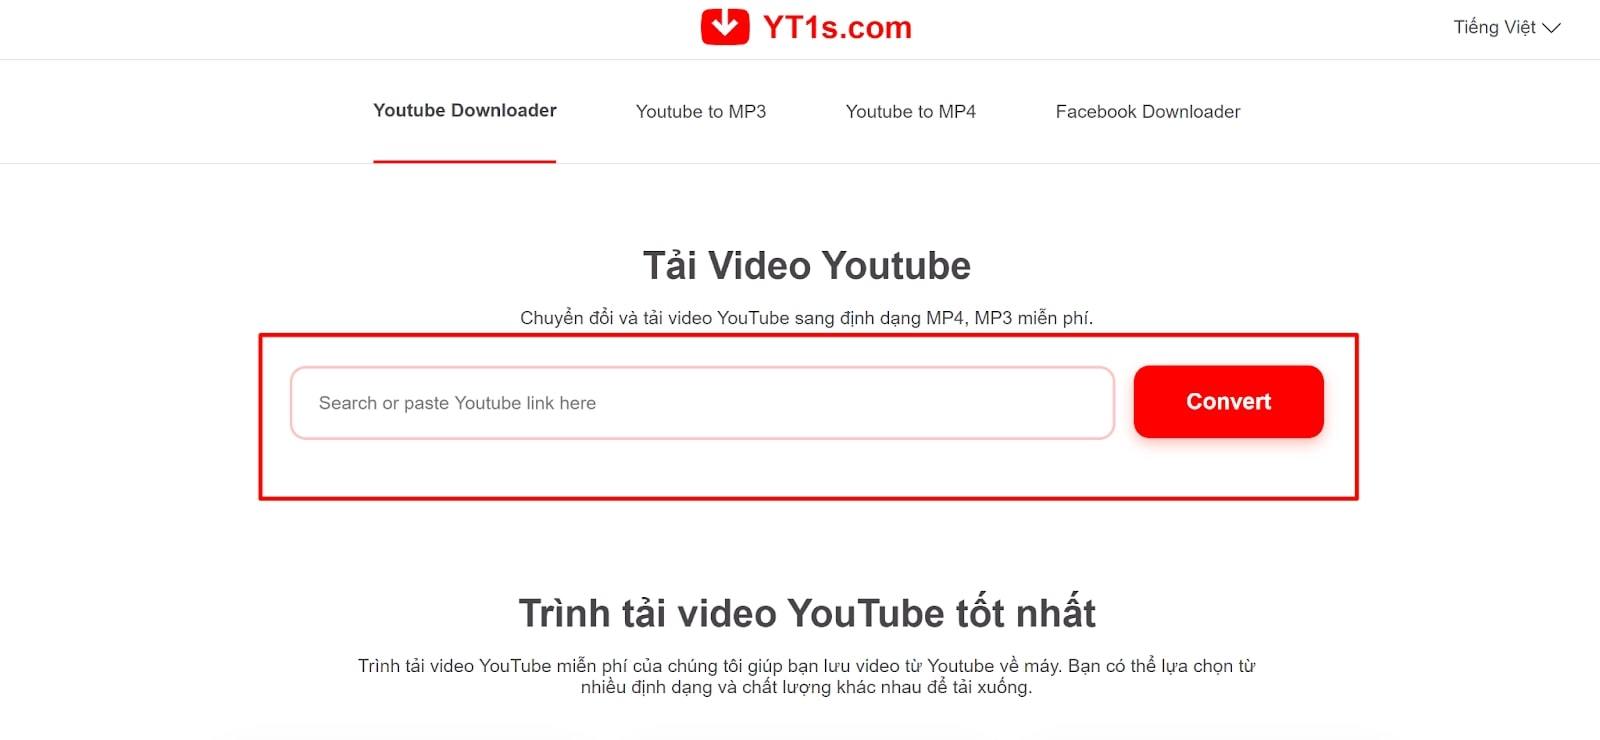 Youtube download yt1s - hormj